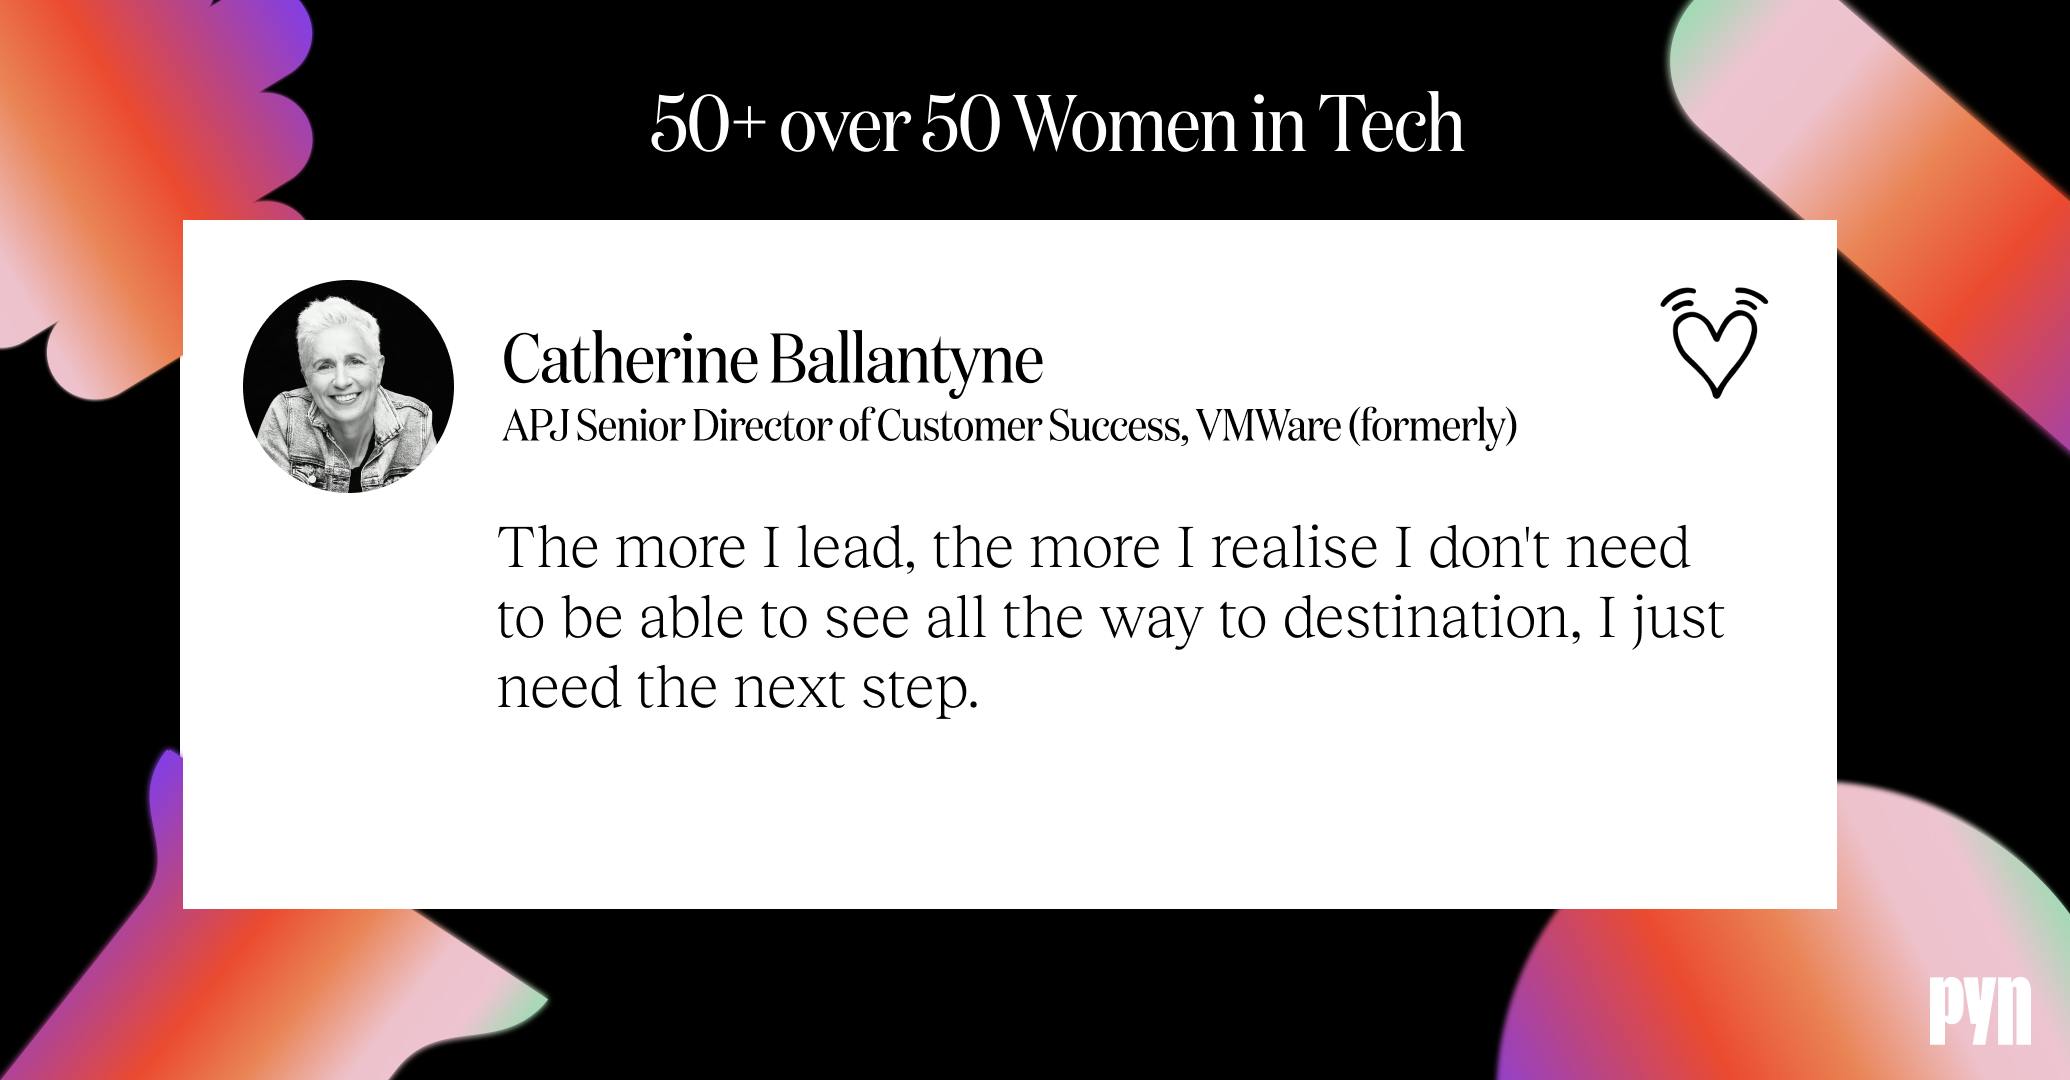 Catherine Ballantyne